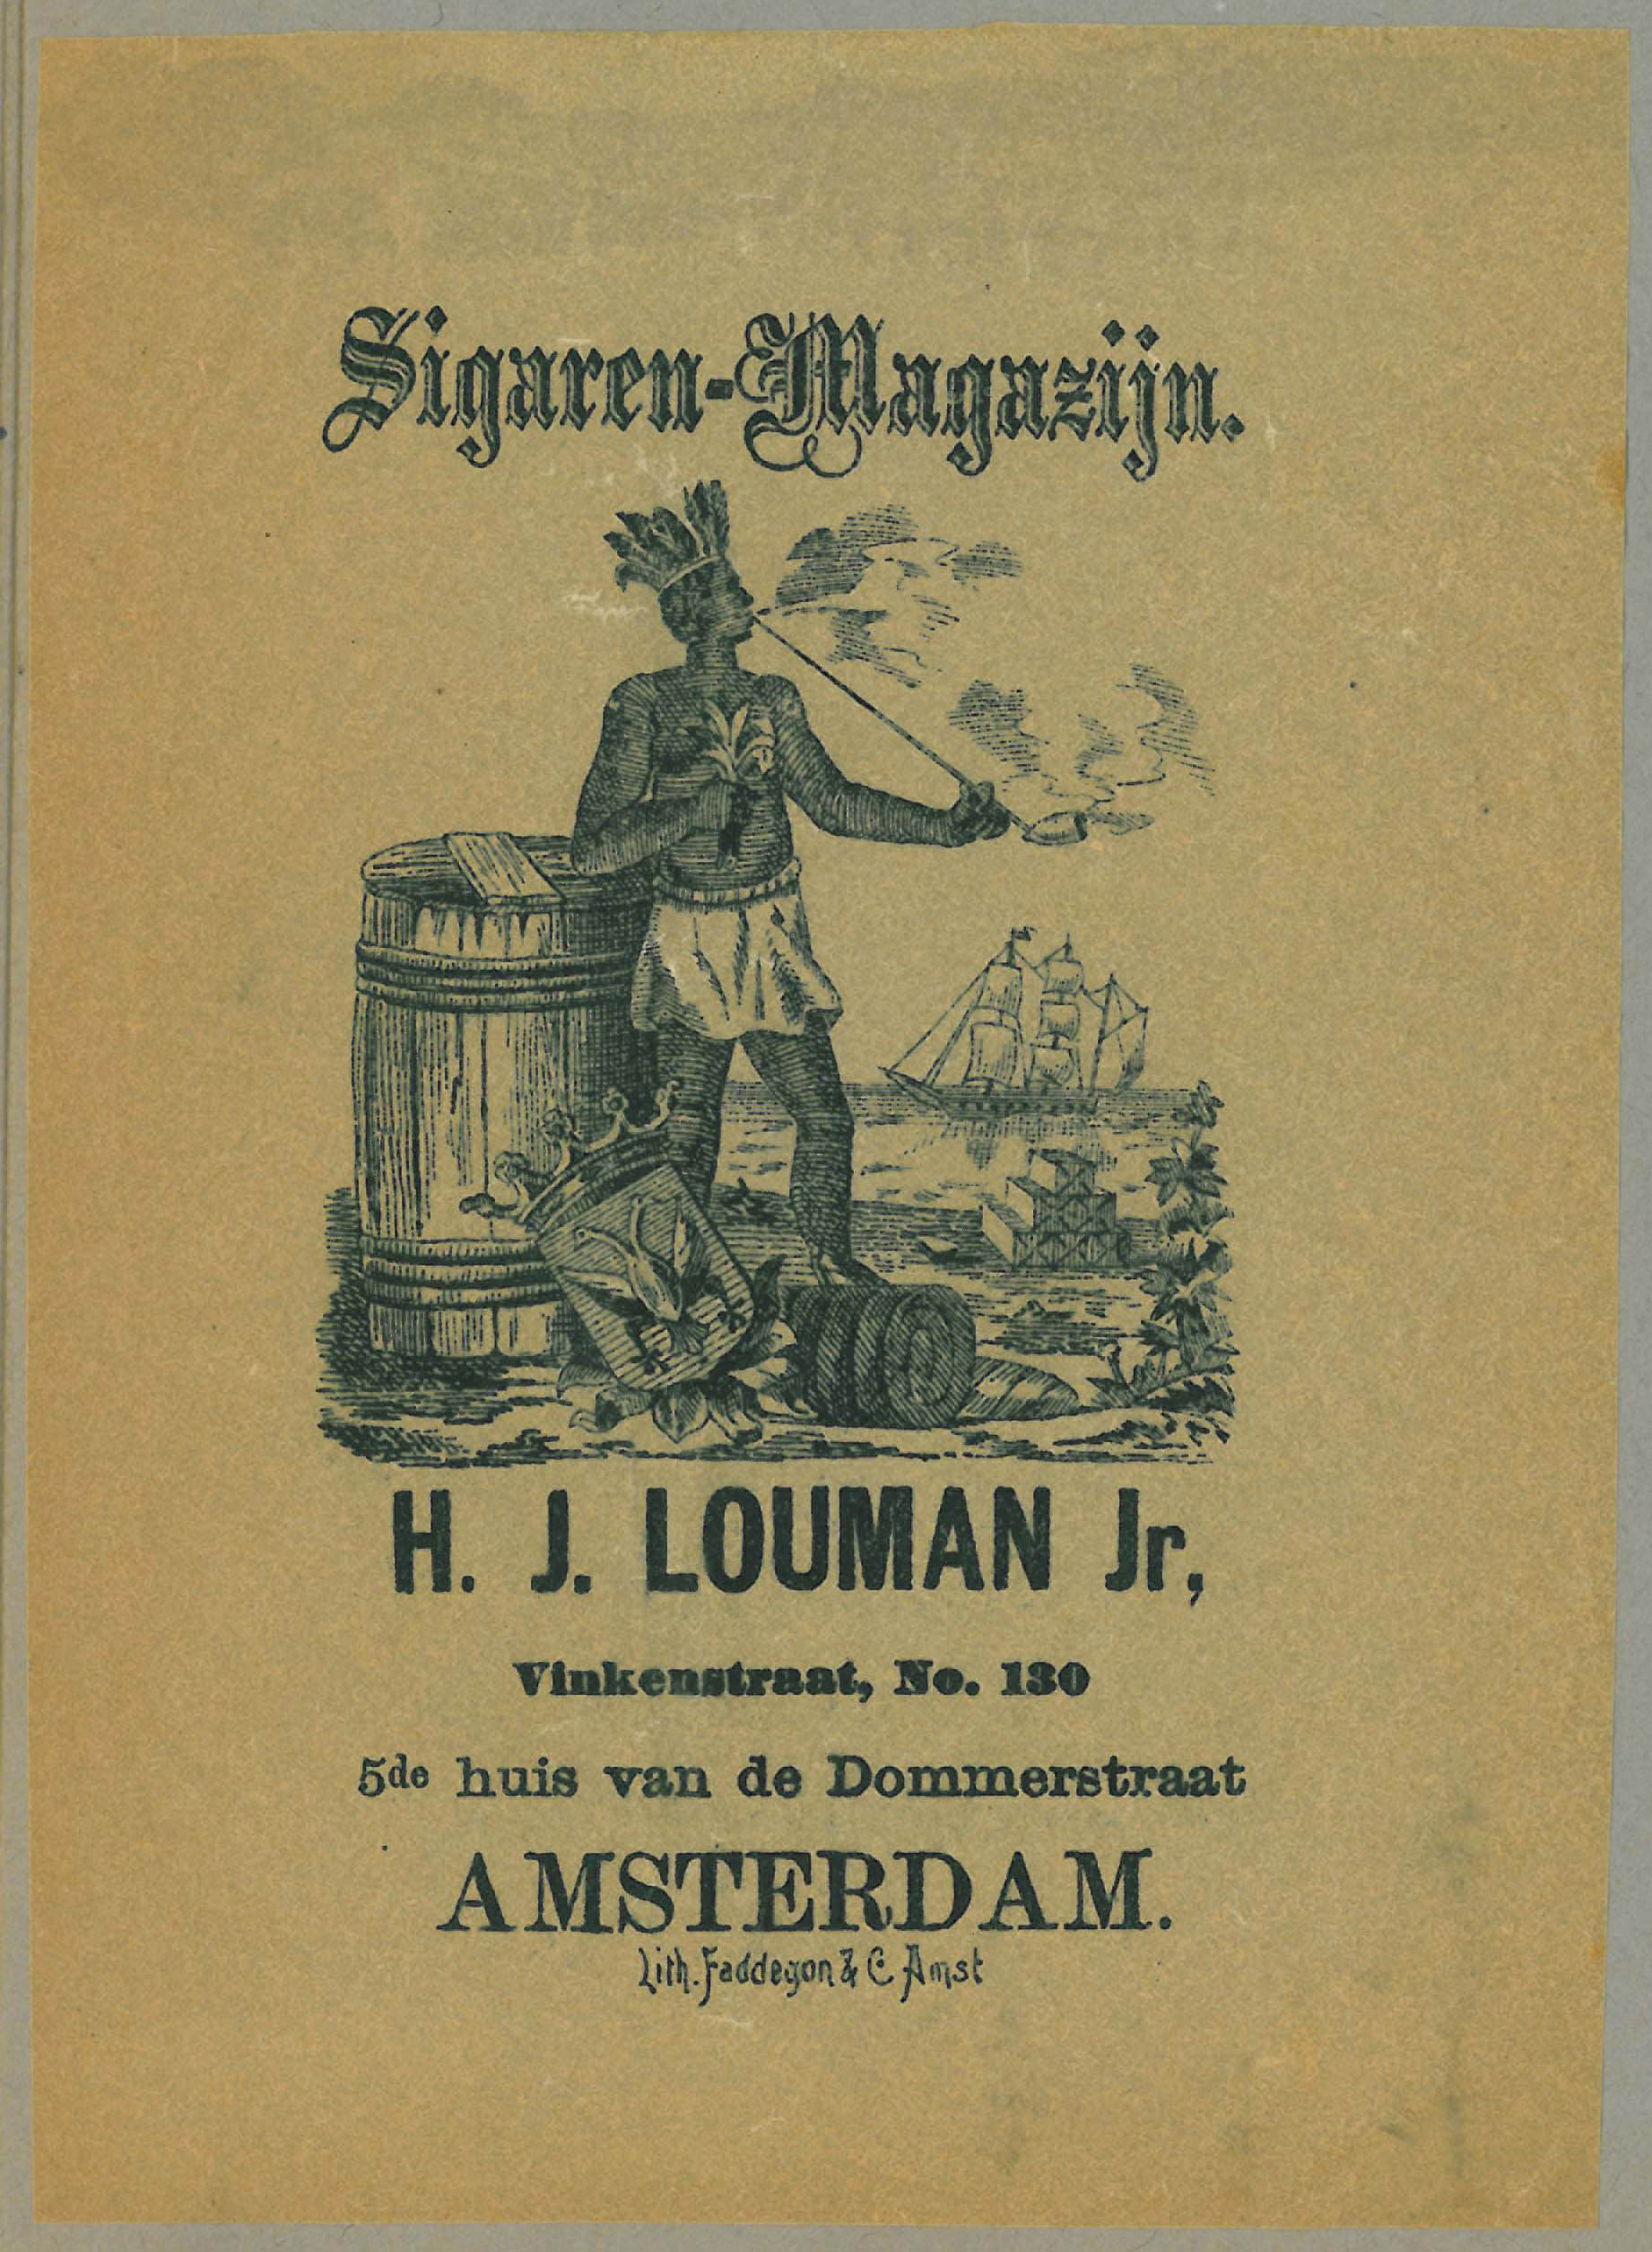 13-26.957-amsterdam-cigar-bag-moriaan-amsterdam